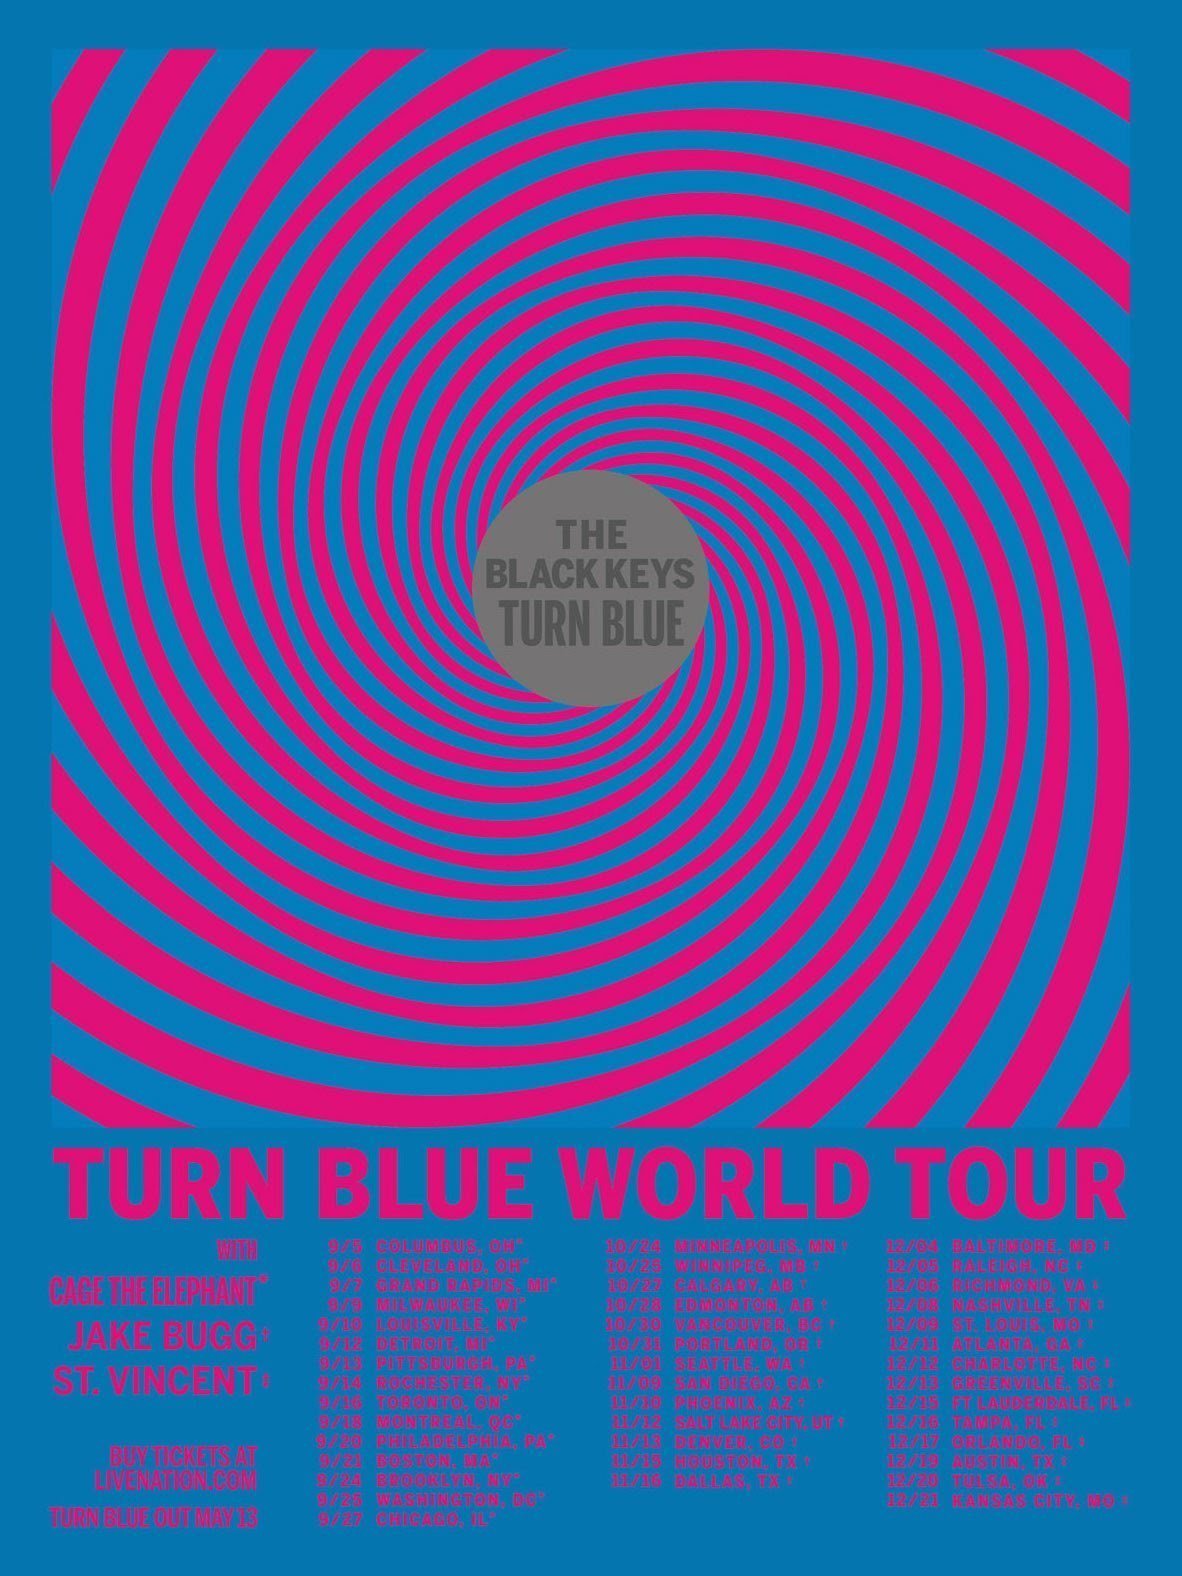 black-keys-turn-blue-2014-tour-dates-ticket-presale